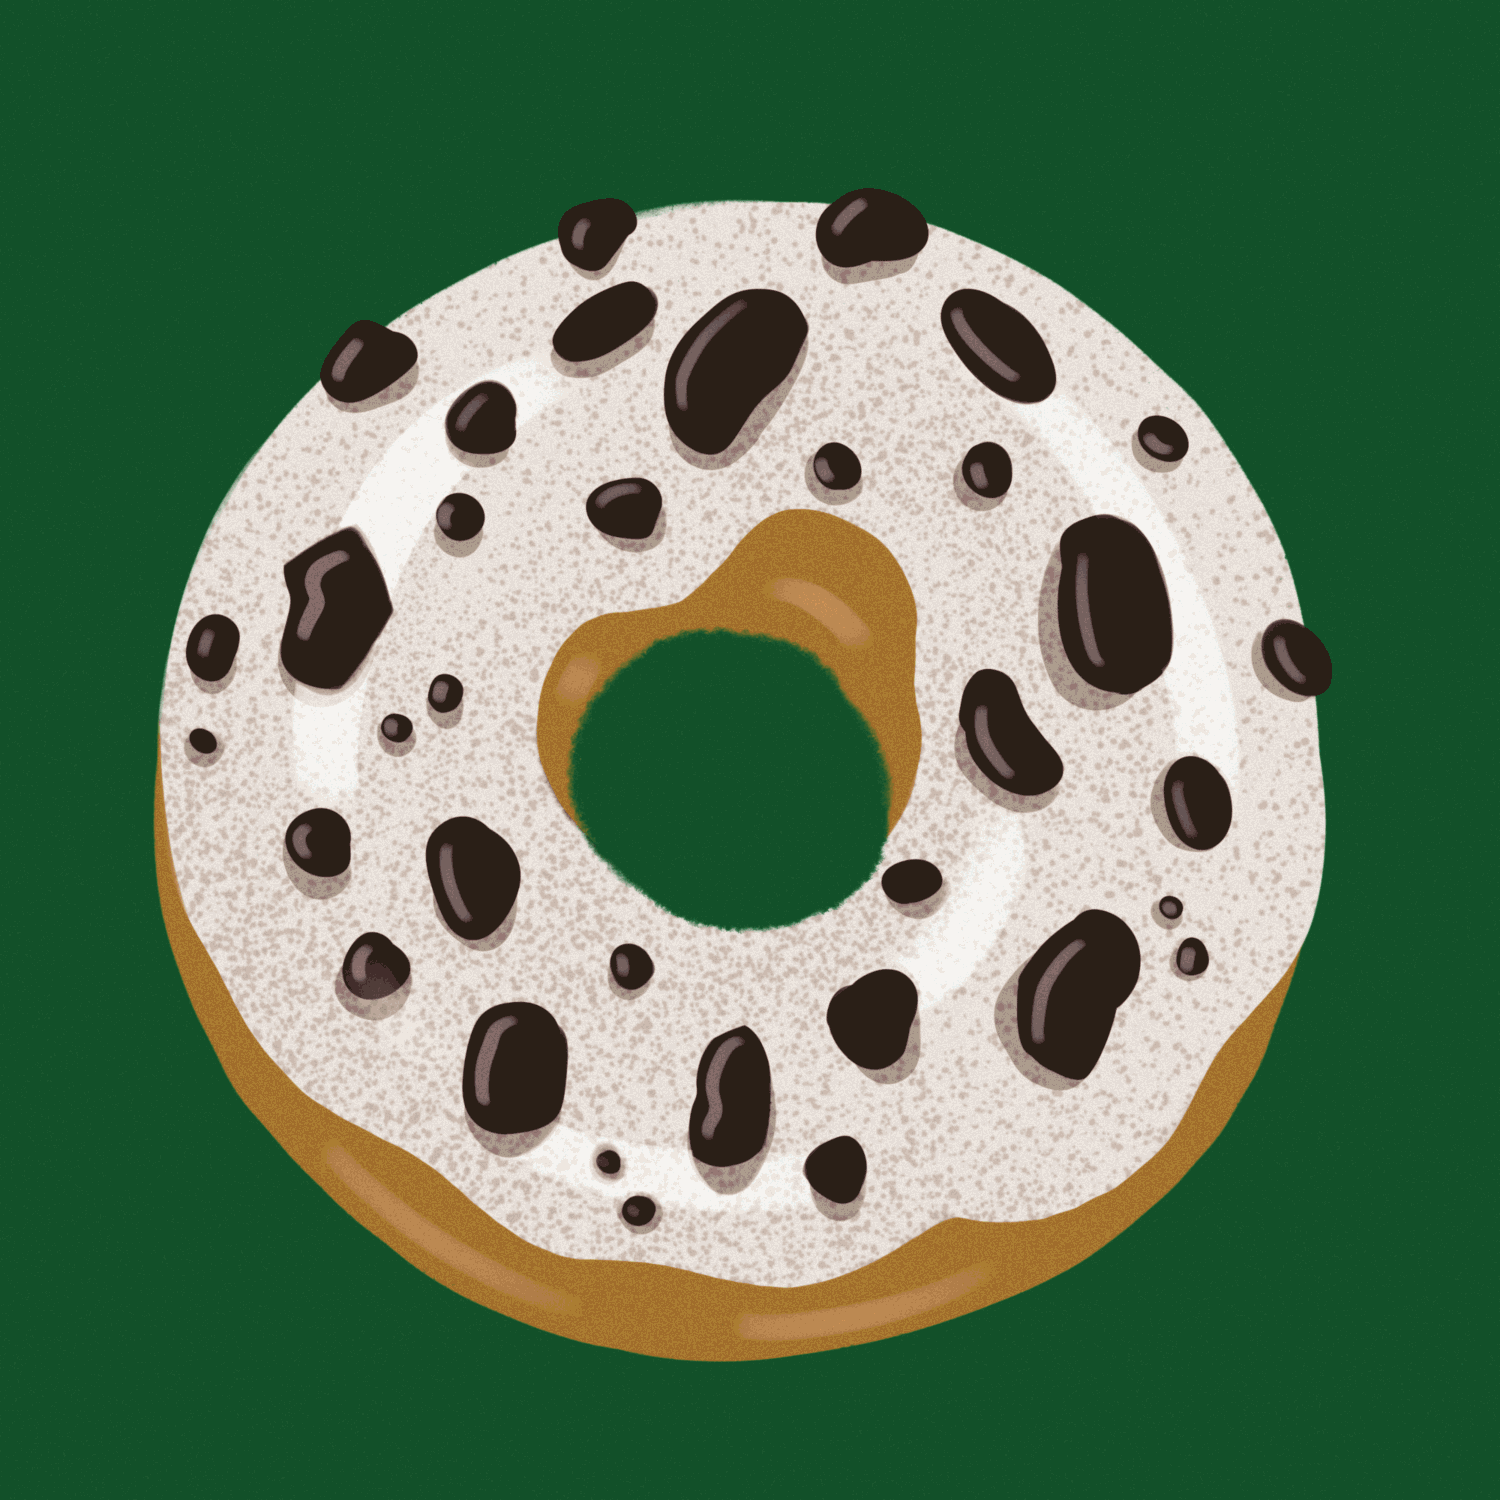 Donuts design donut donuts graphic design hannukah illustration sweet tasty